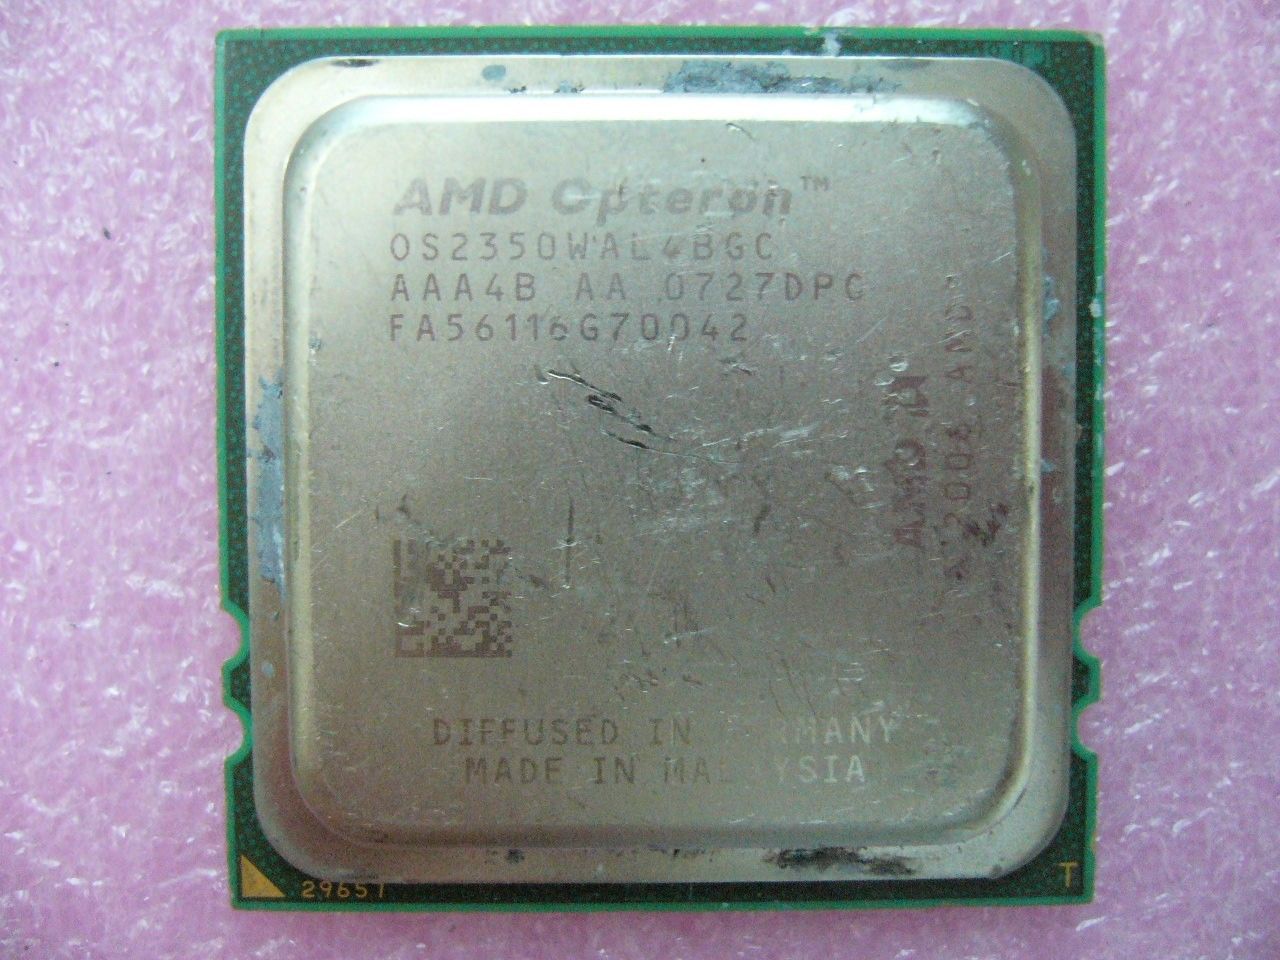 QTY 1x AMD Opteron 2350 2 GHz Quad-Core (OS2350WAL4BGC CPU Socket F 1207